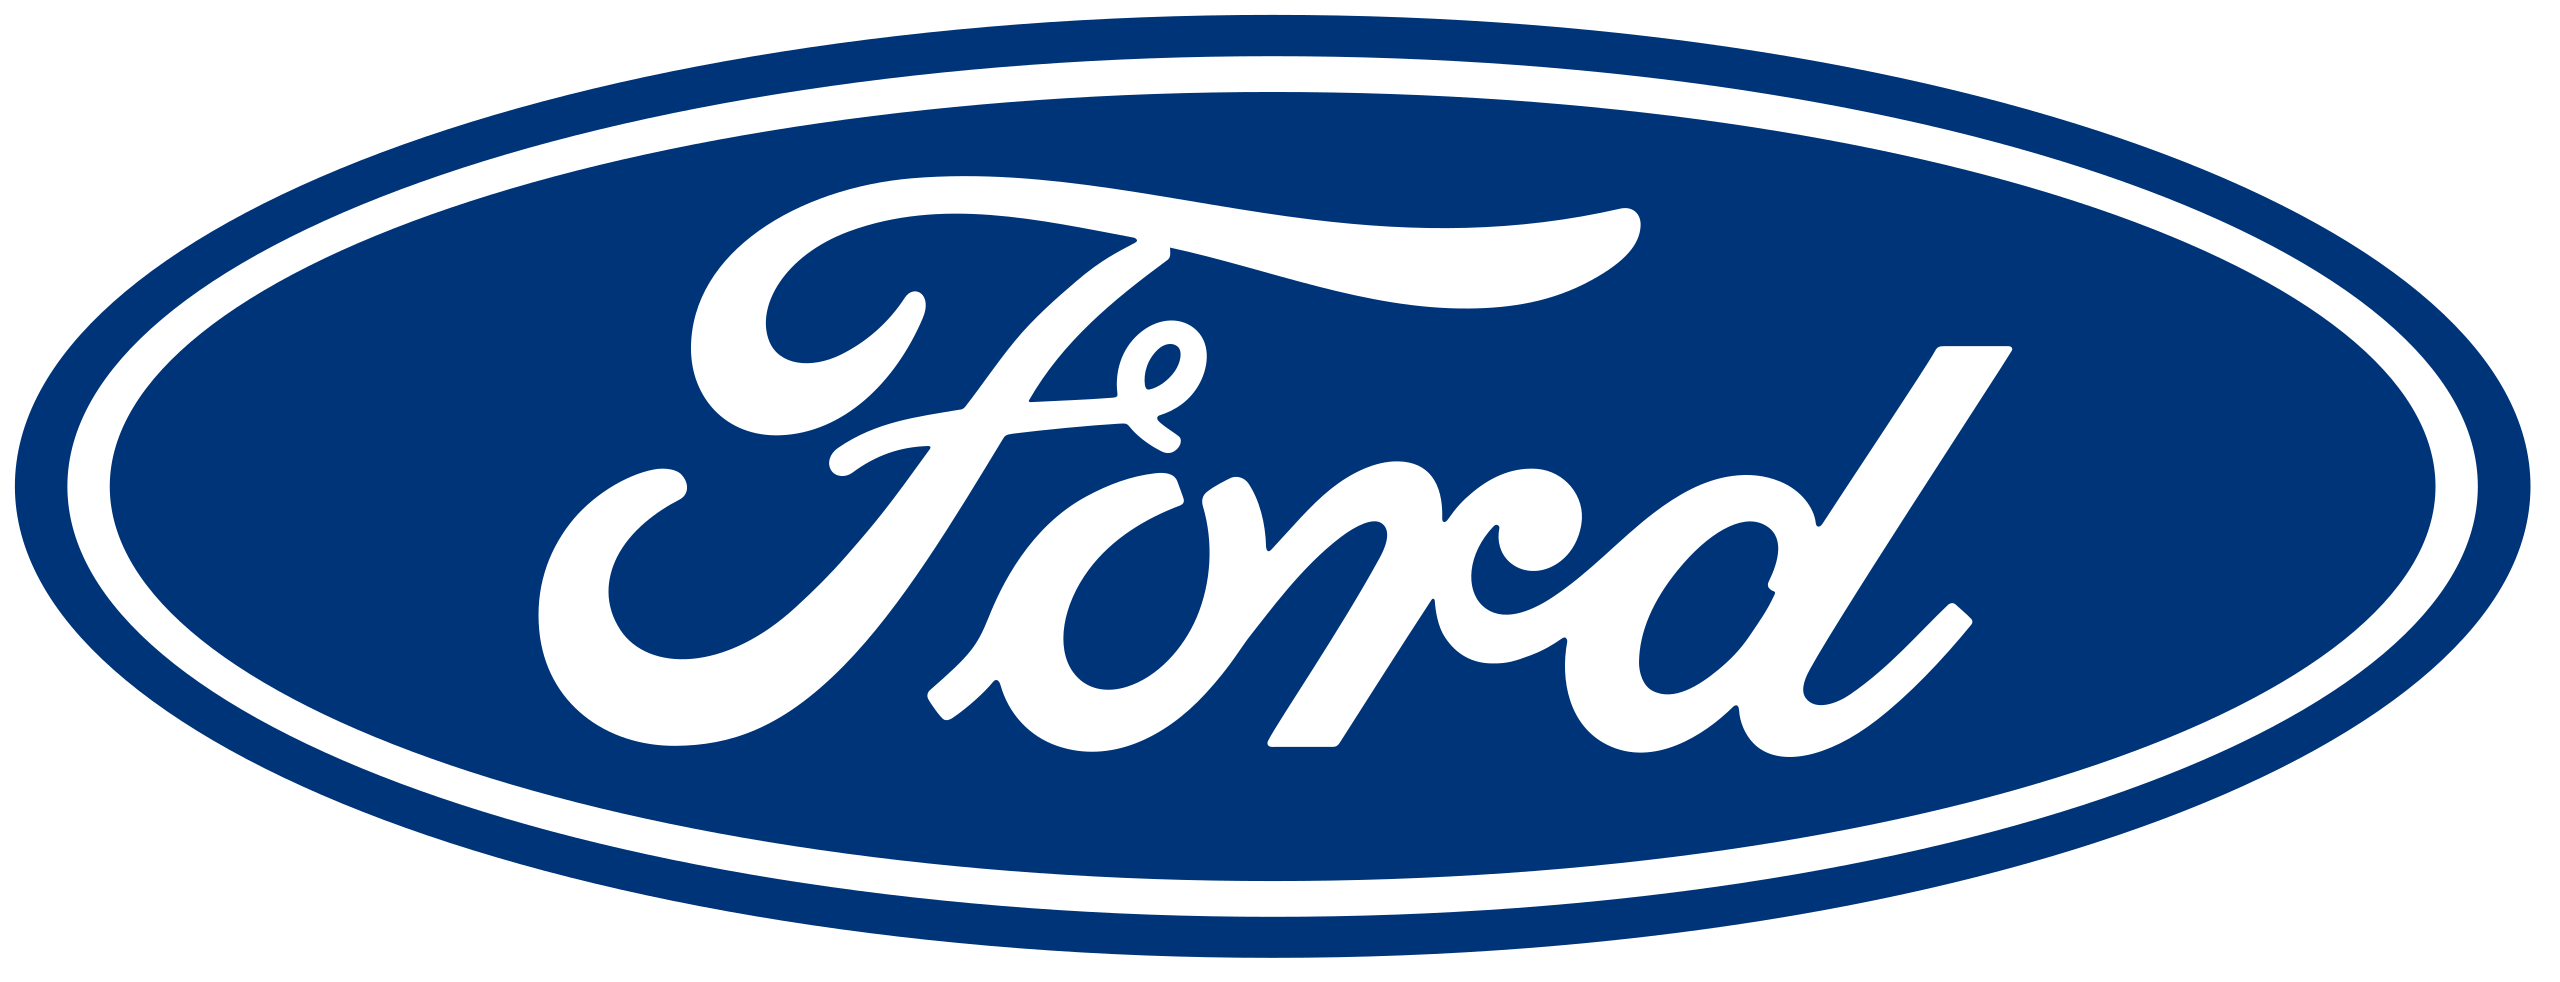 Ford company logo (flat)